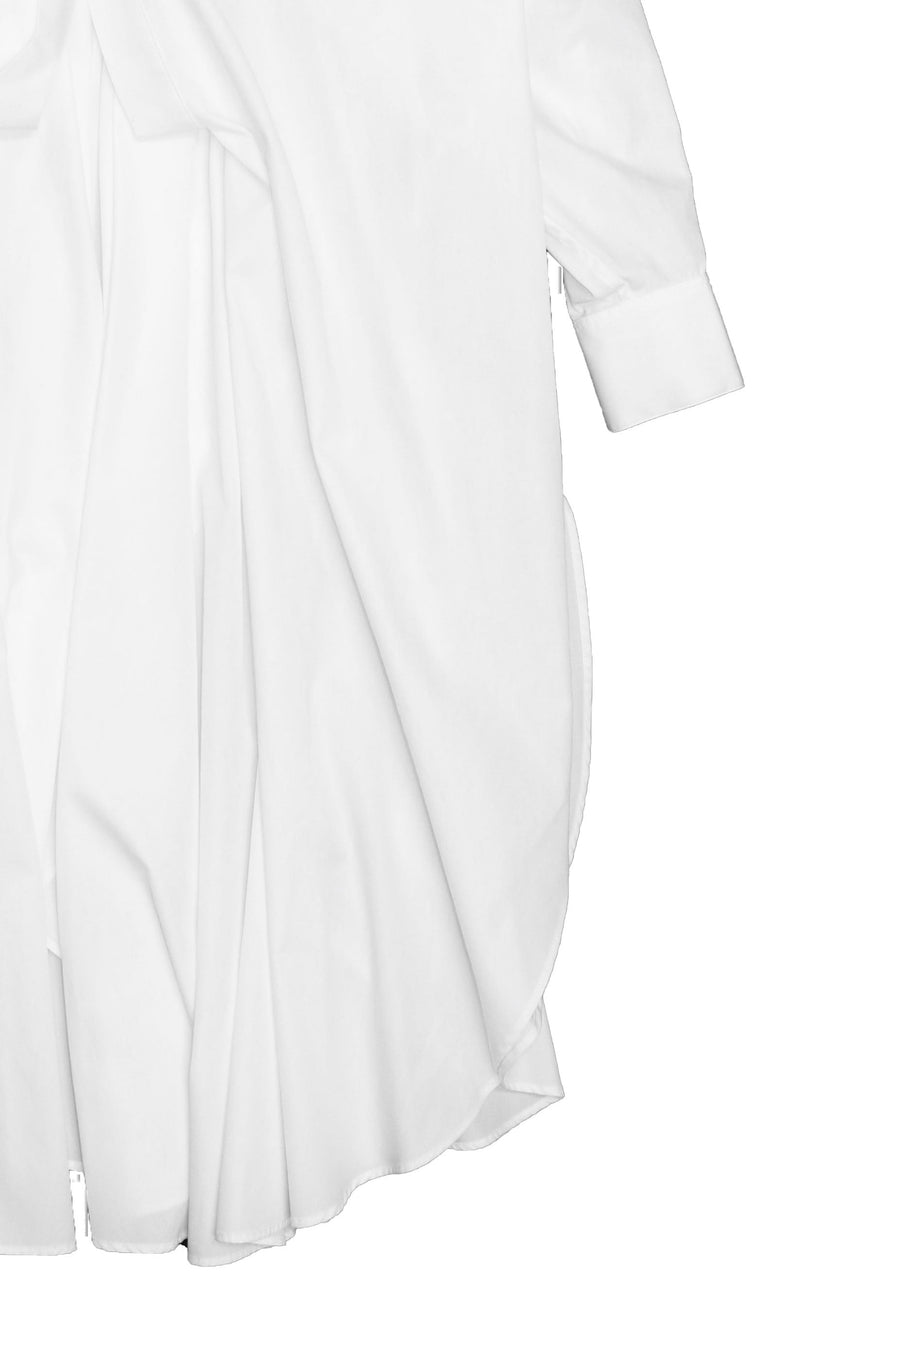 AKIKOAOKI  2 way shirt dress 02(WHITE)